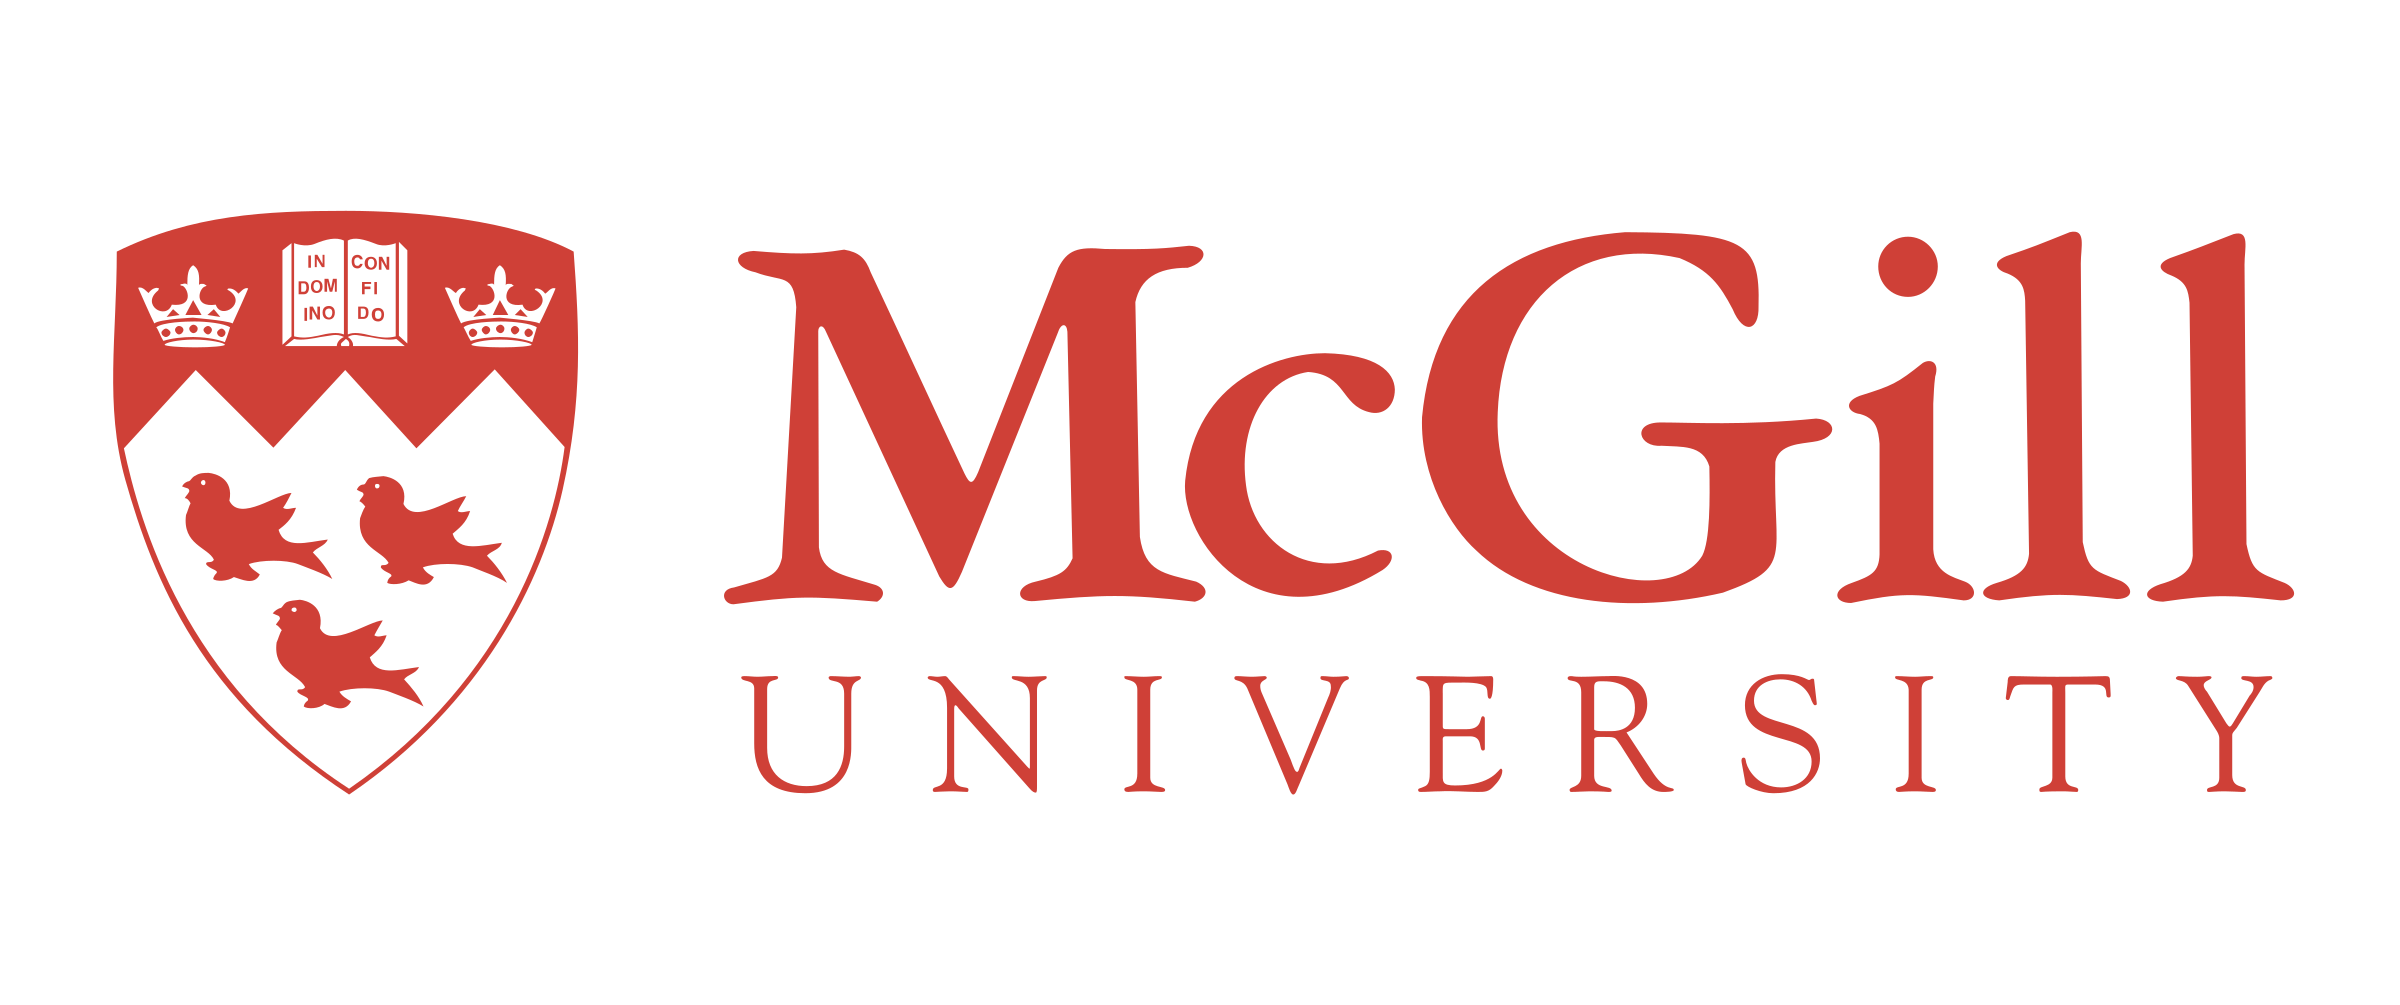 McGill logo